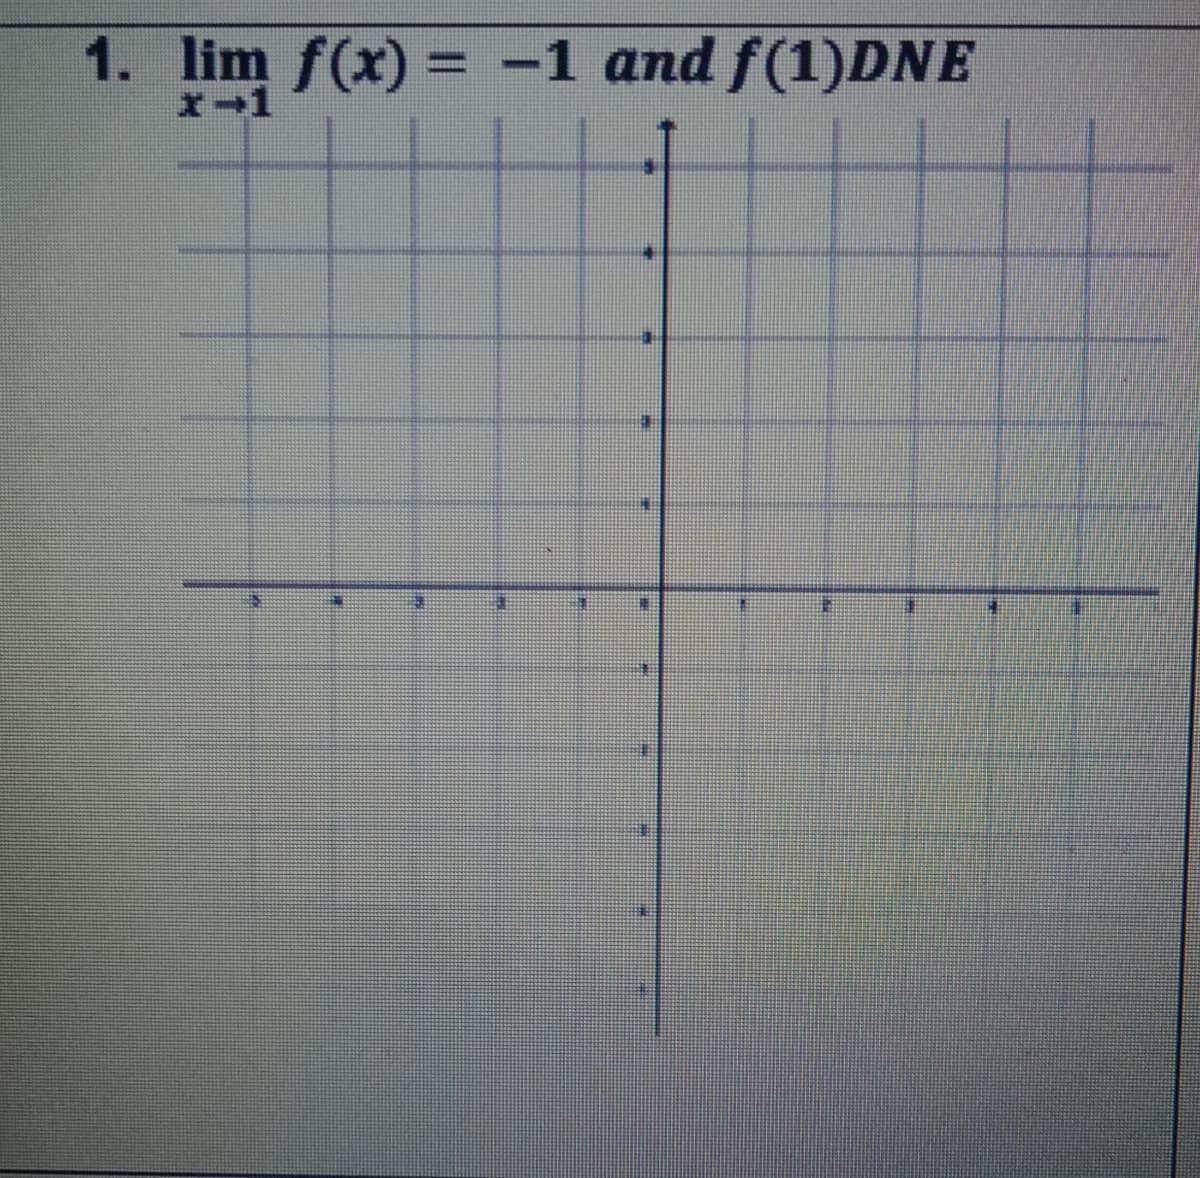 1. lim f(x) = -1 and f(1)DNE
